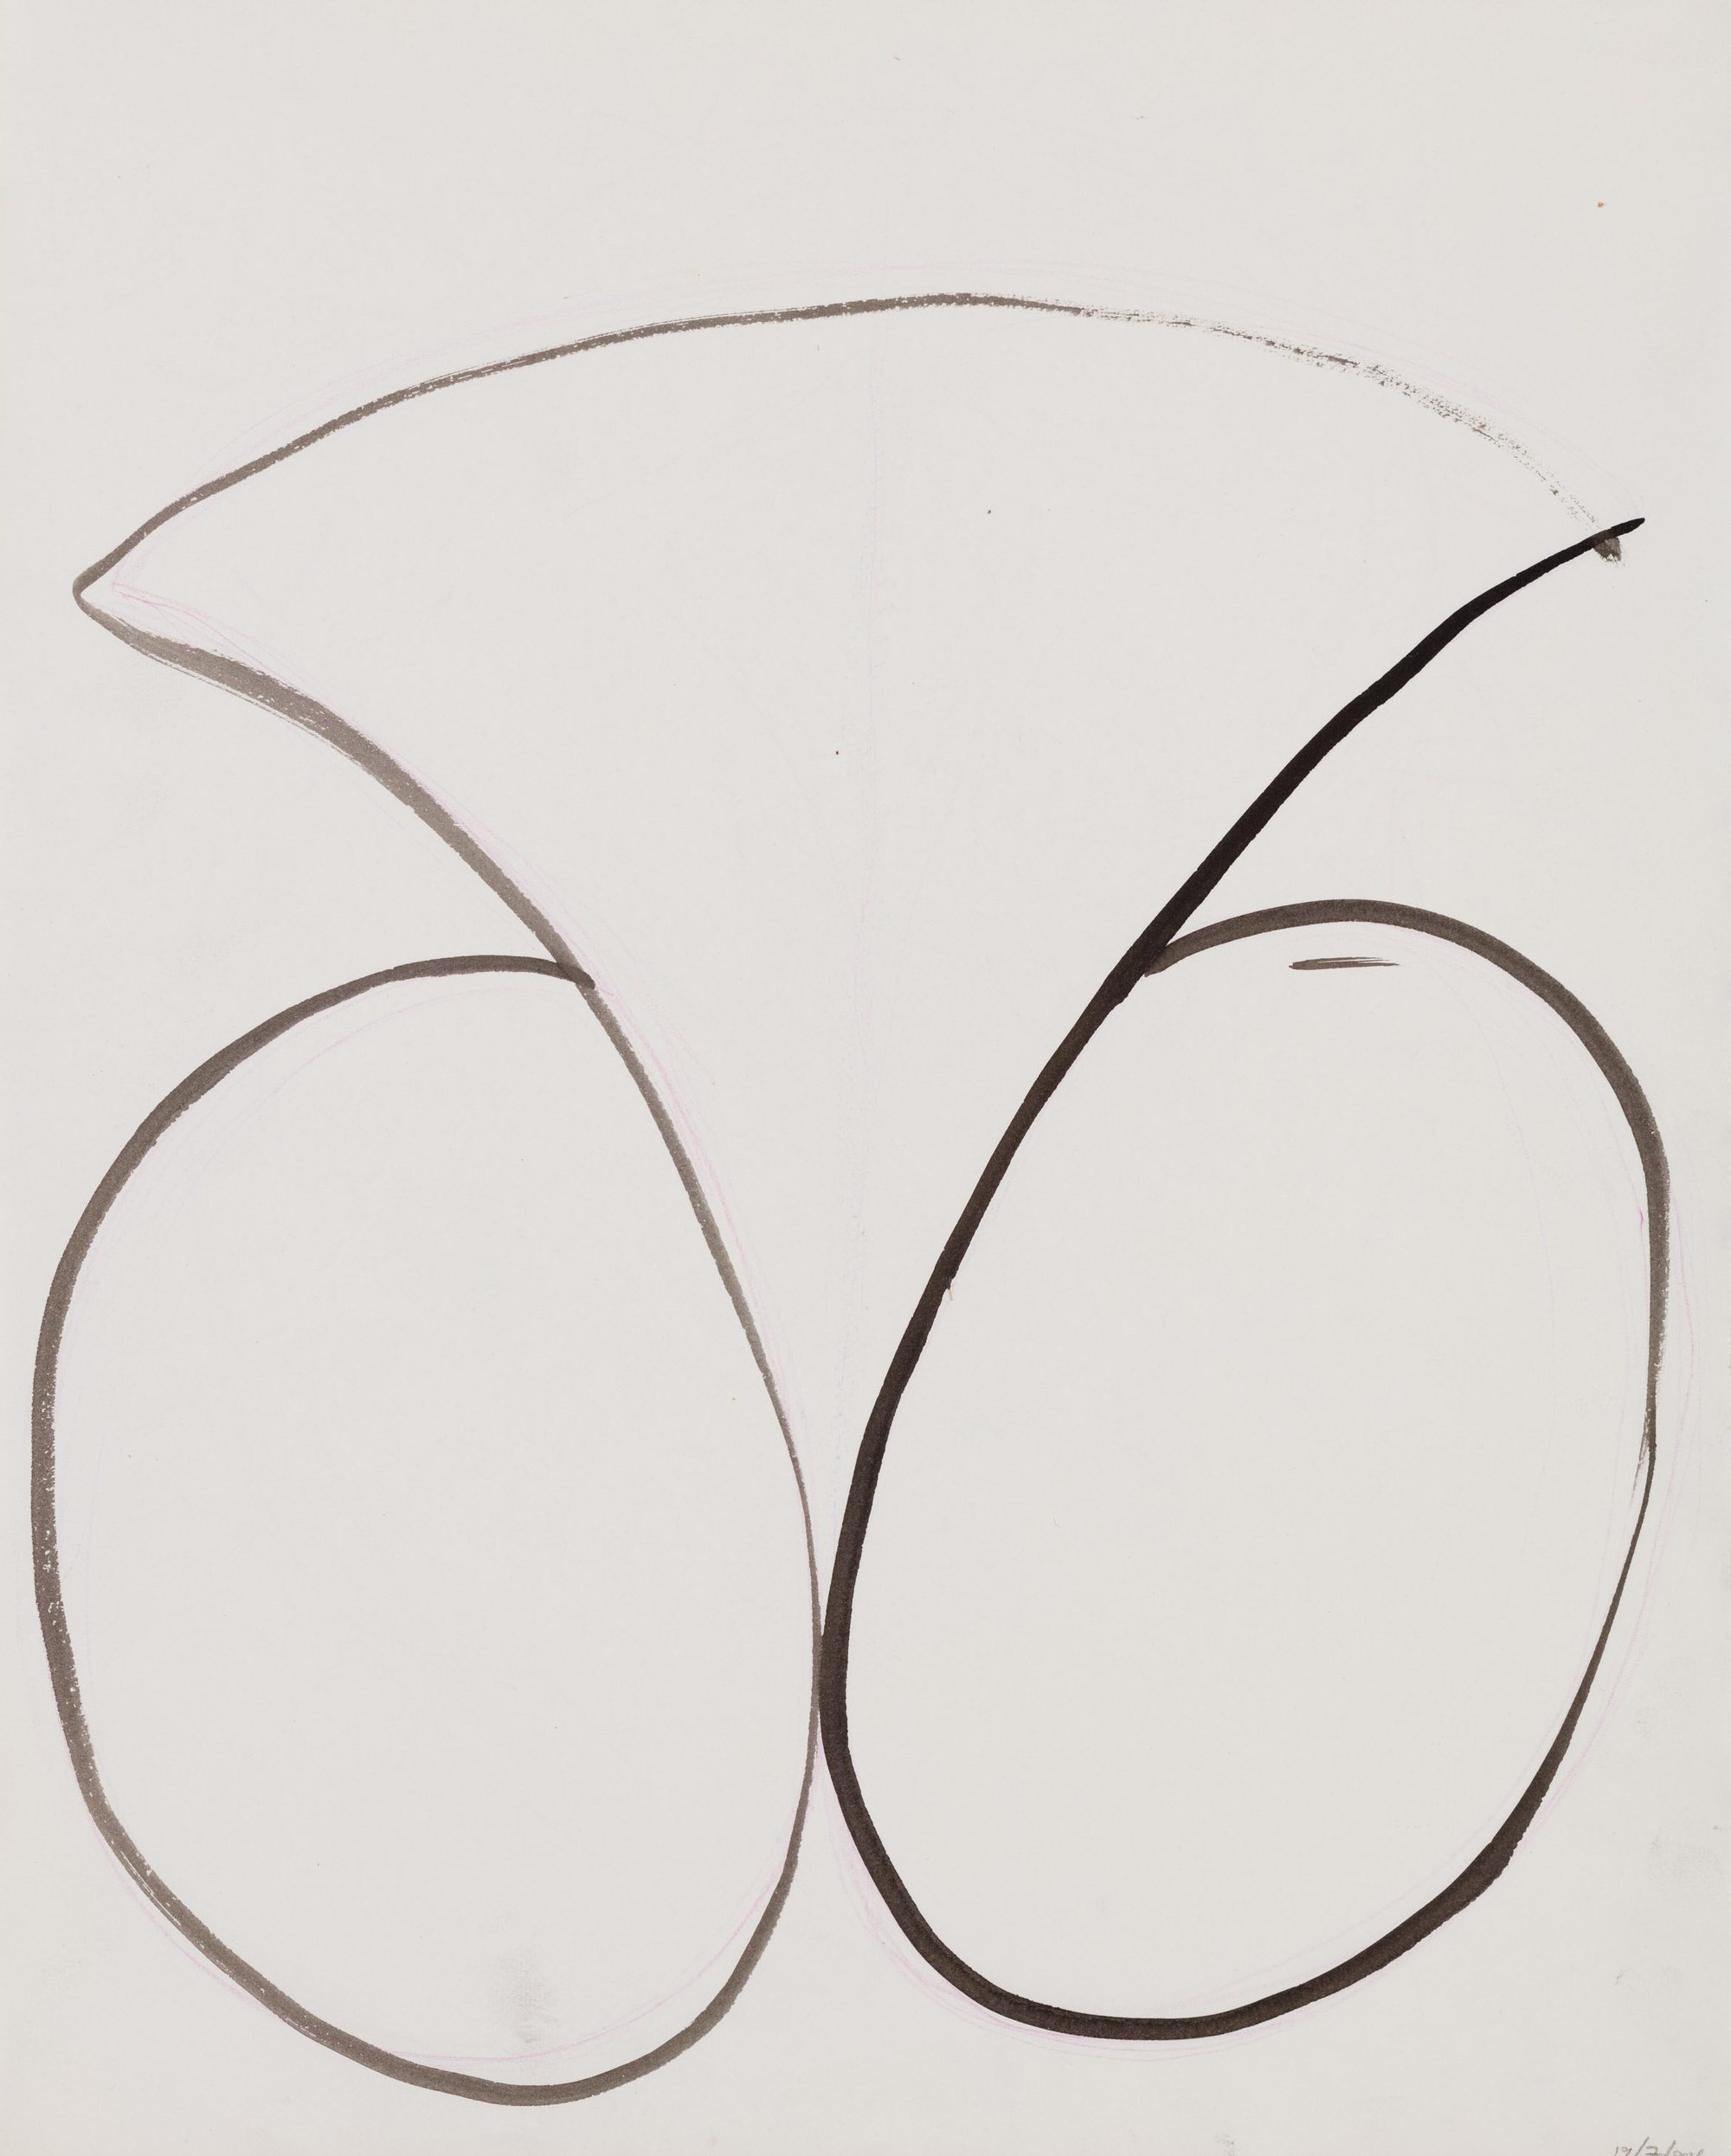 Liliane Lijn, Sketch for She, detail, india ink on paper, 48.5 x 39 cm (unframed), 1985